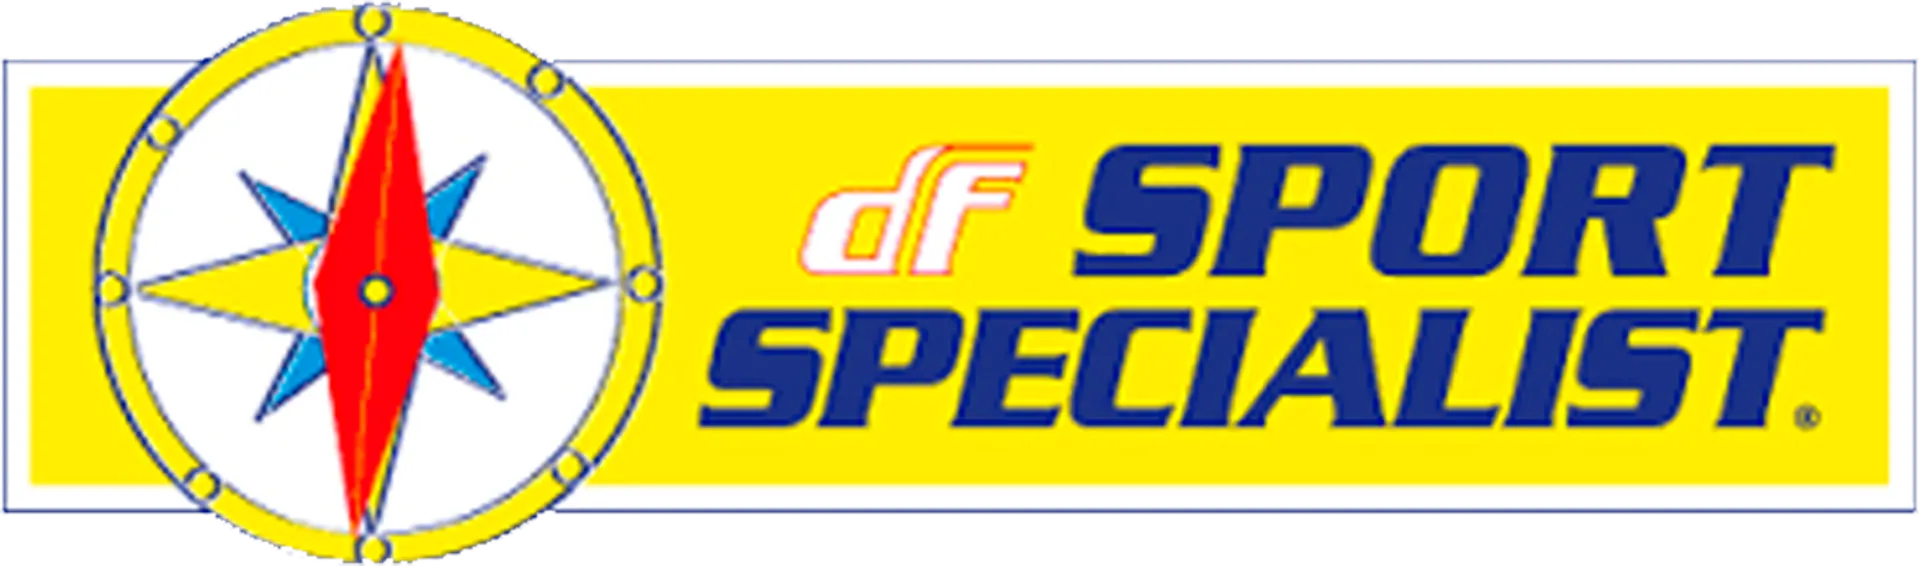 DF SPORT SPECIALIST logo